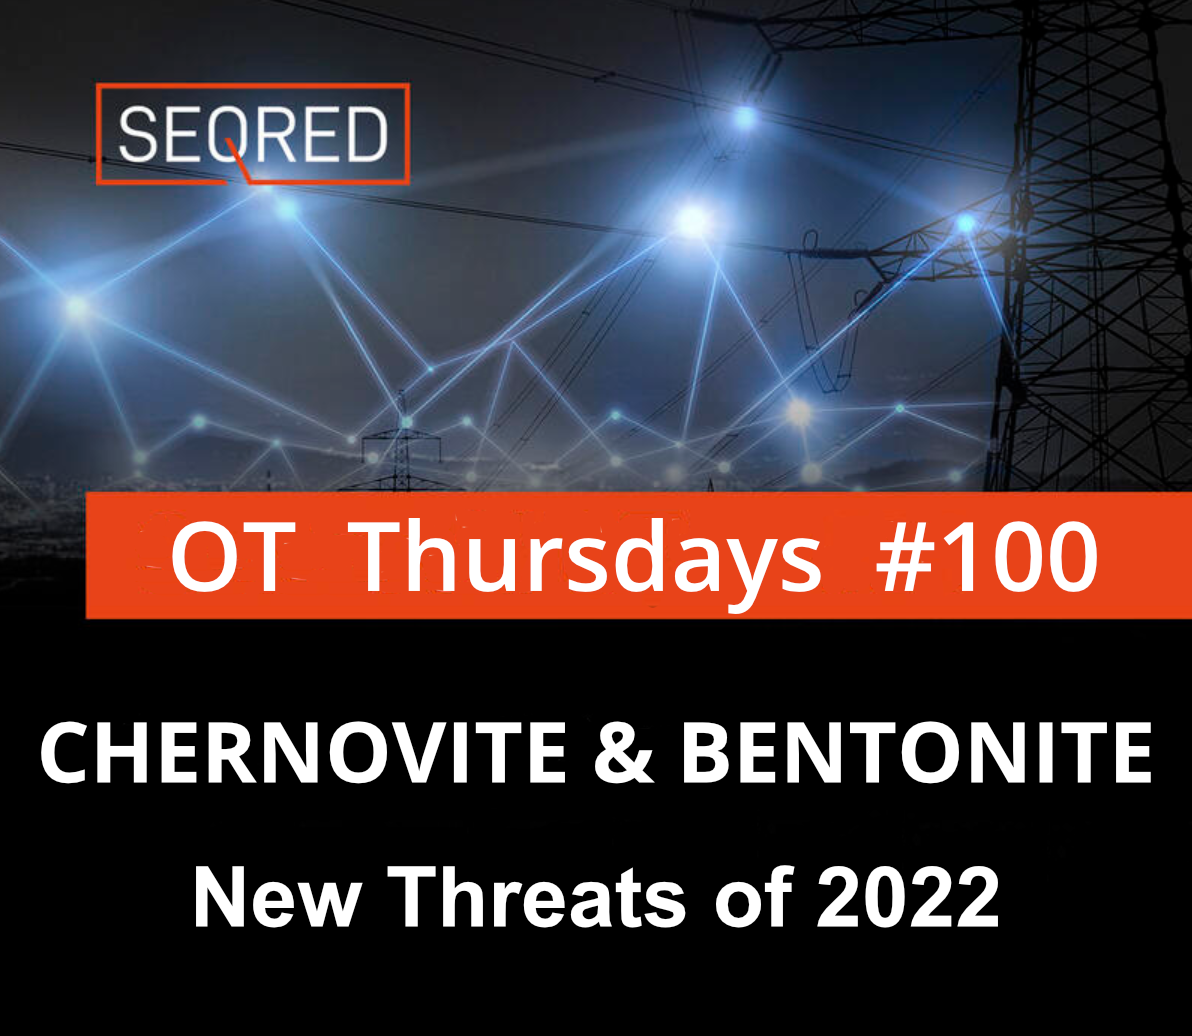 Chernovite Bentonite New Threats of 2022